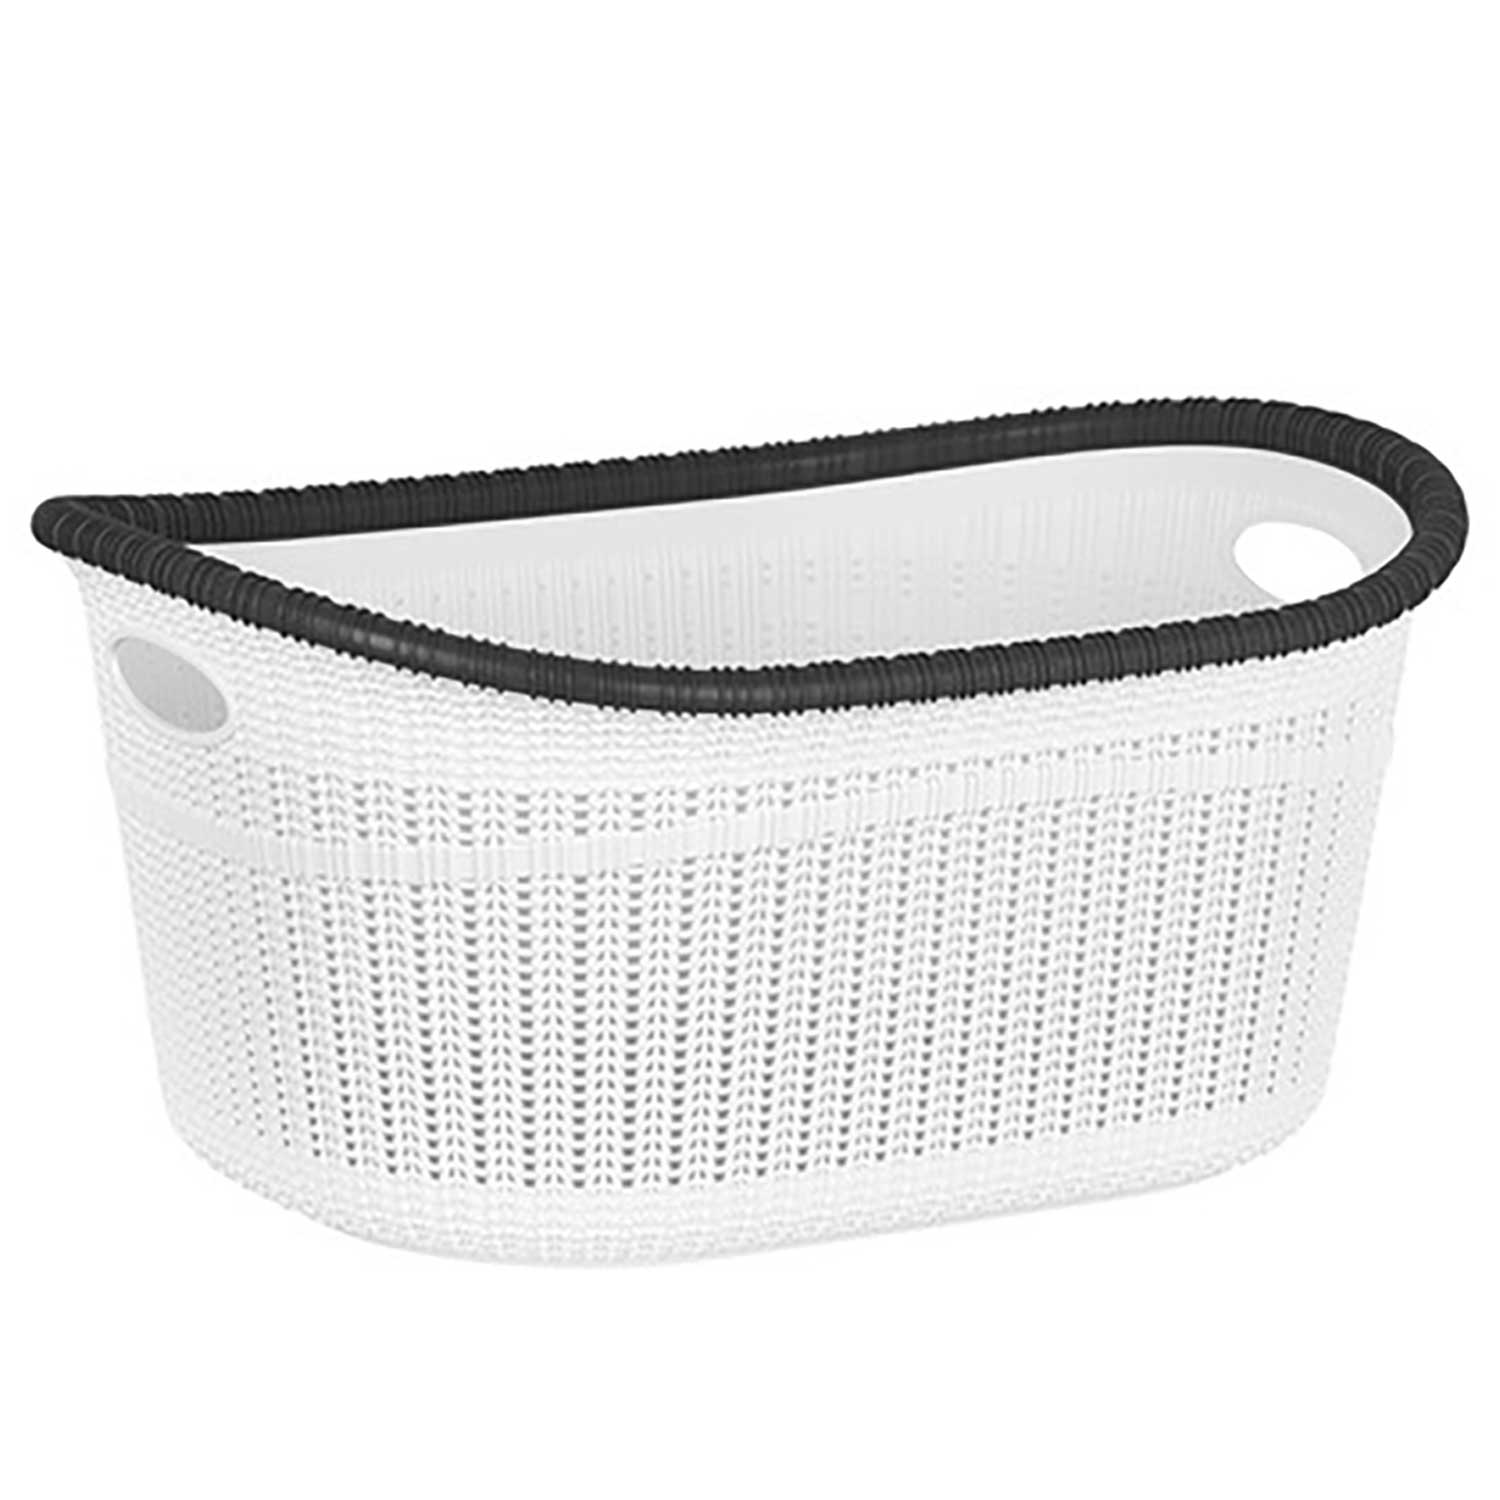 Laundry basket with black trim, 24L